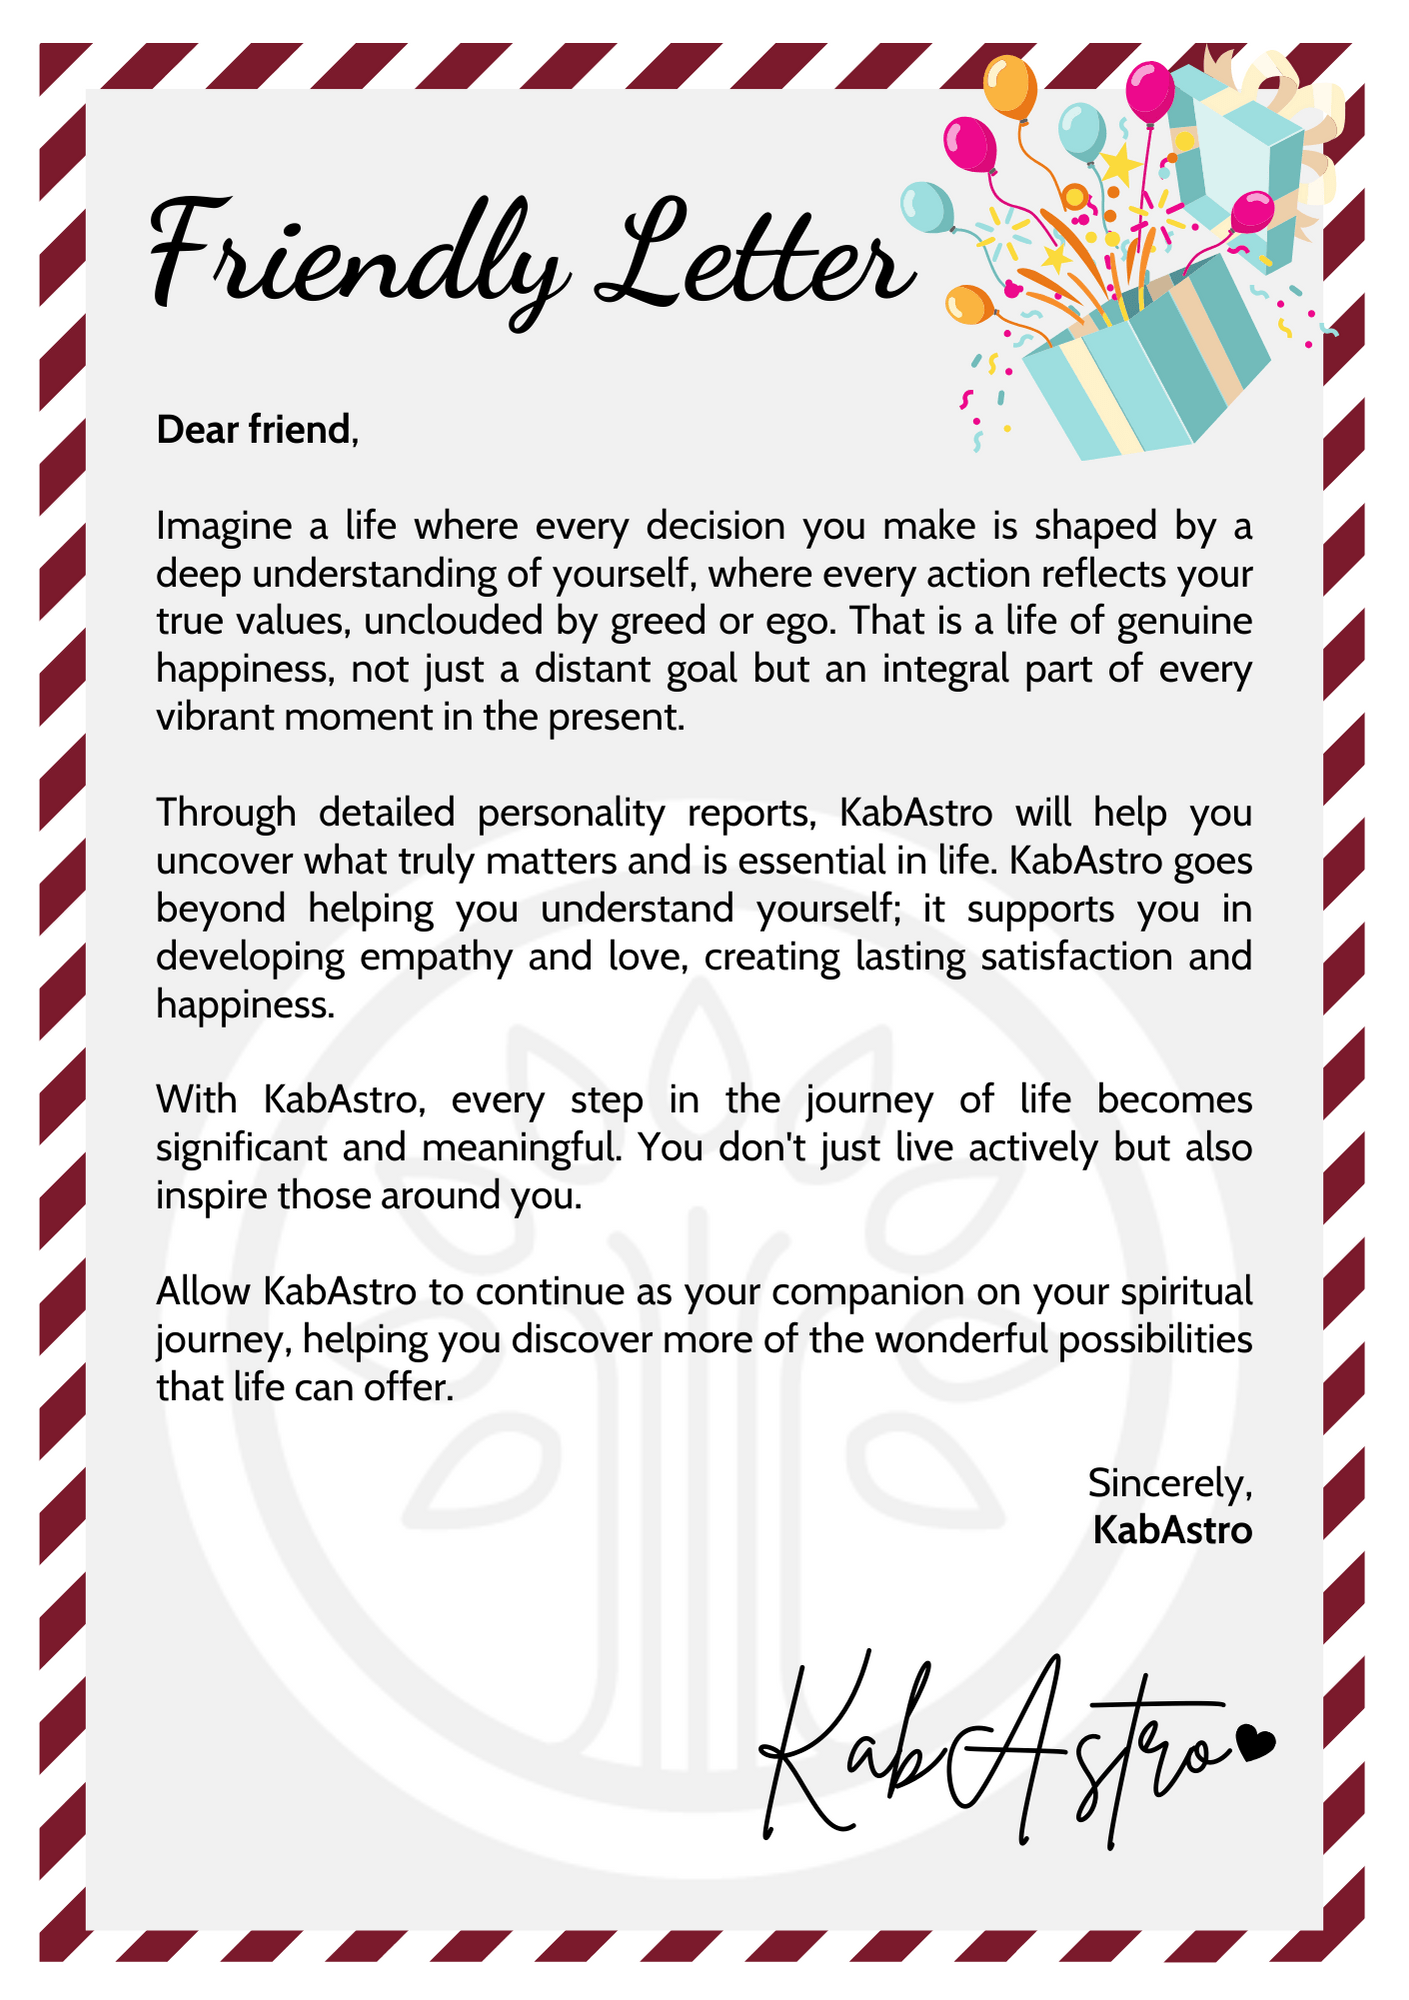 kabastro letter | Kabastro